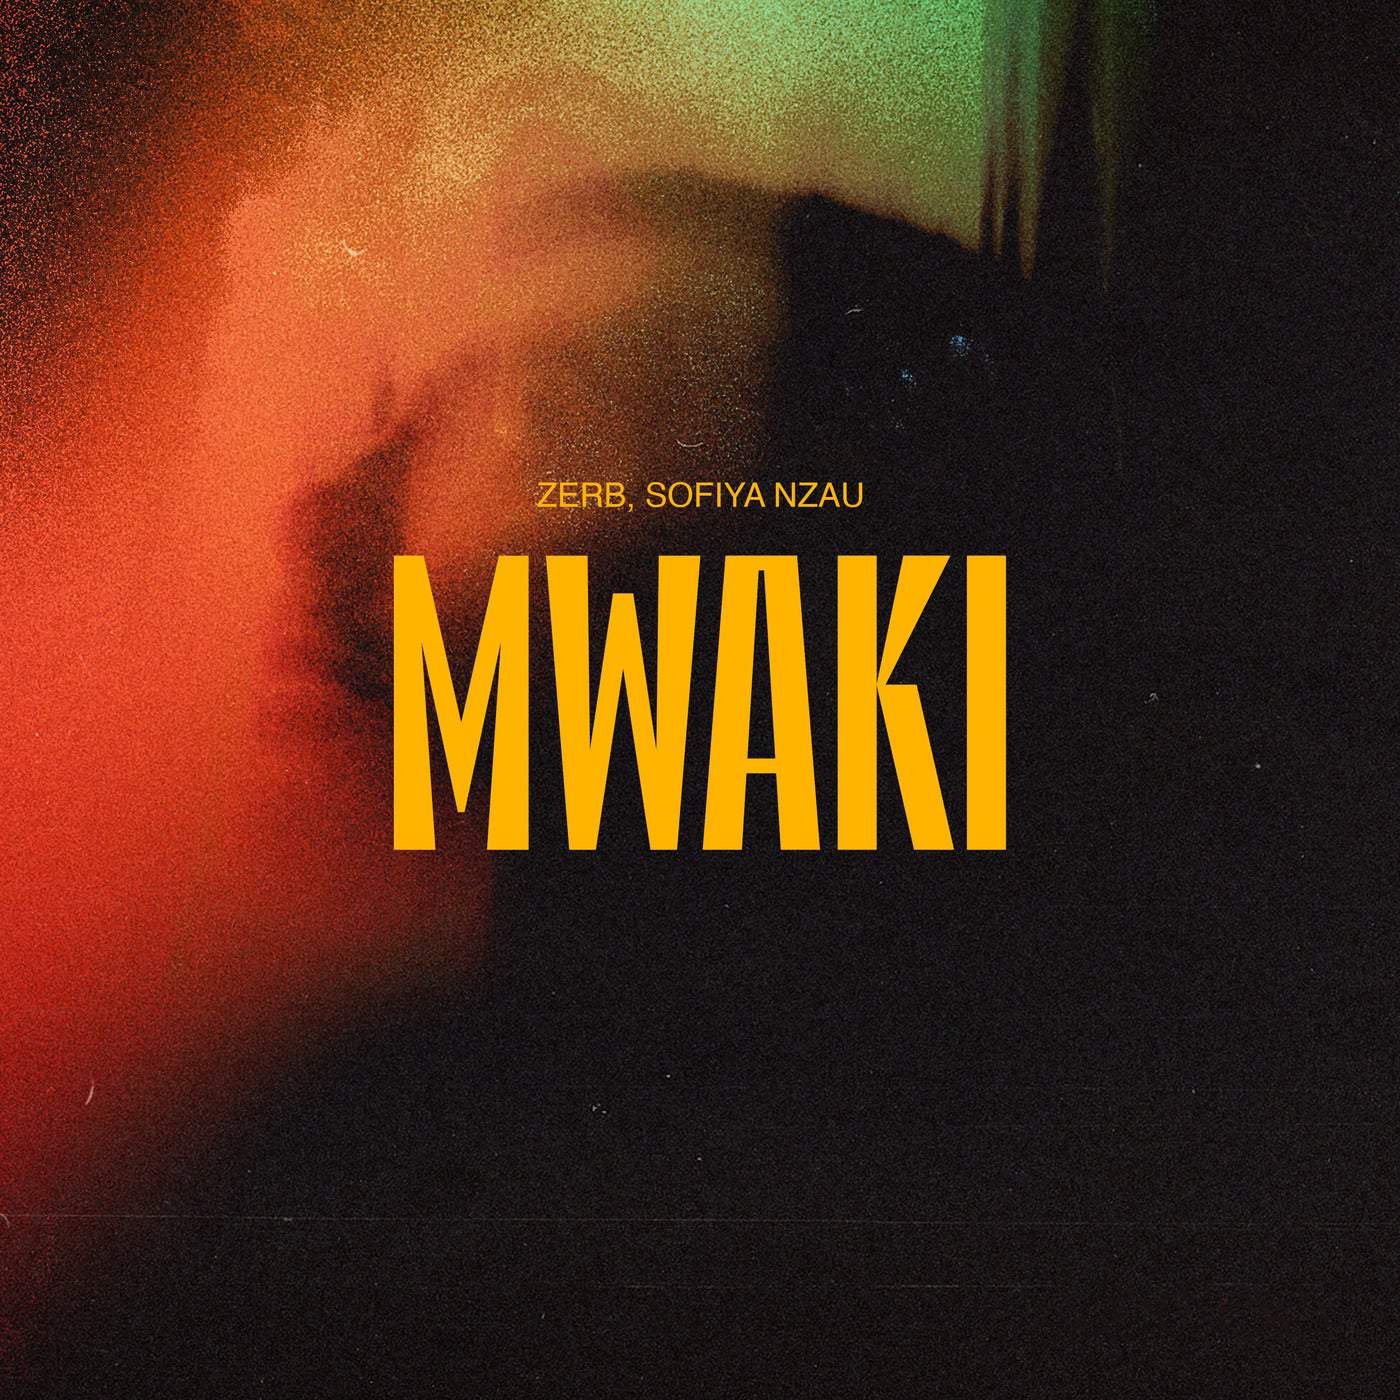 image cover: Zerb, Sofiya Nzau - Mwaki - Extended Mix on TH3RD BRAIN